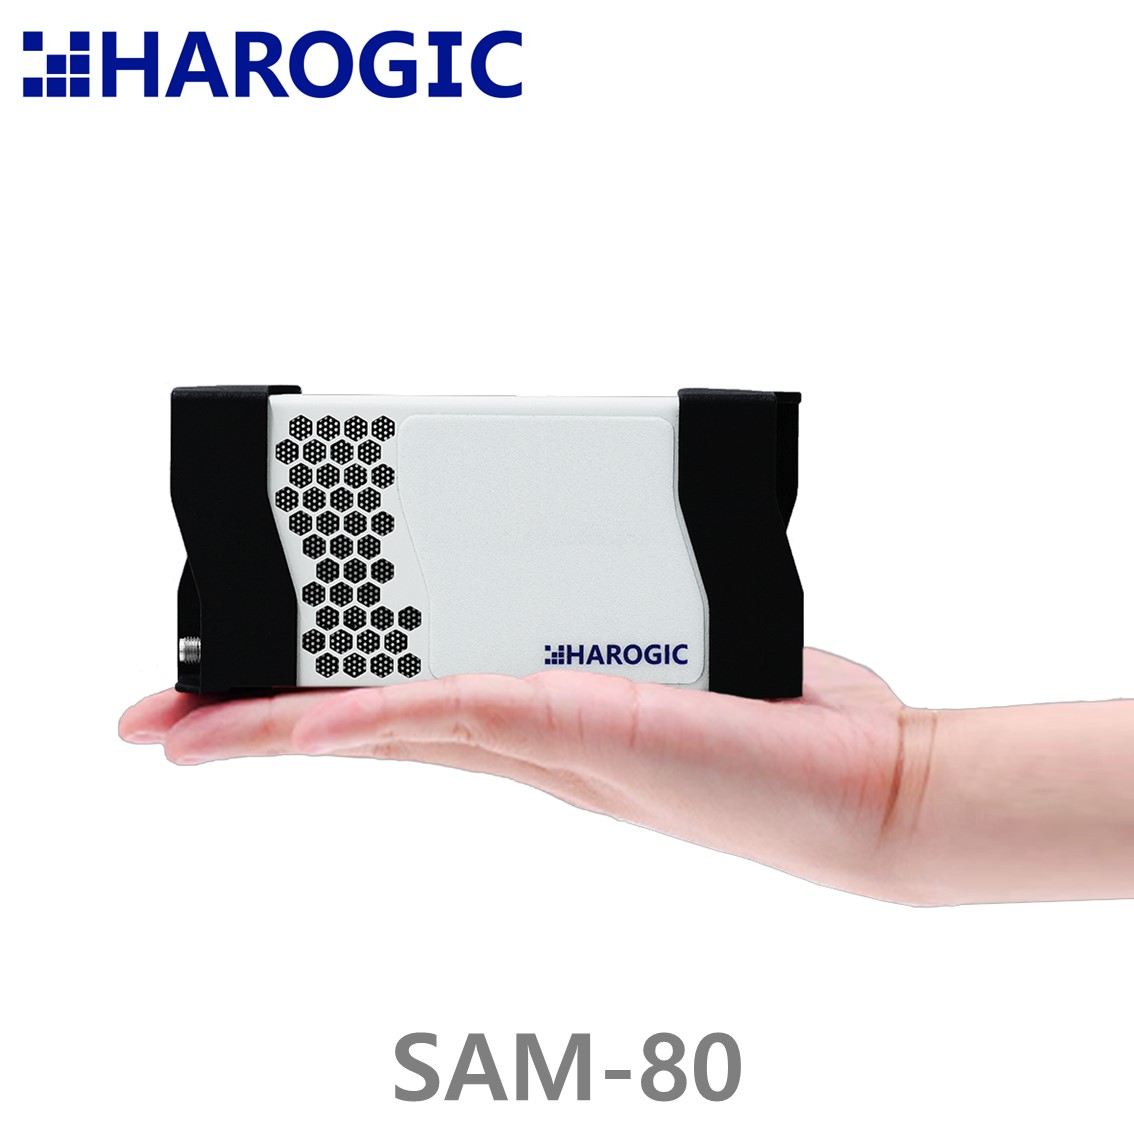 [ HAROGIC ] SAM-80,  USB 초소형 리얼타임 스펙트럼분석기9kHz - 8.5 GHz, 100MHz 대역폭, 300GHz/s sweep speed